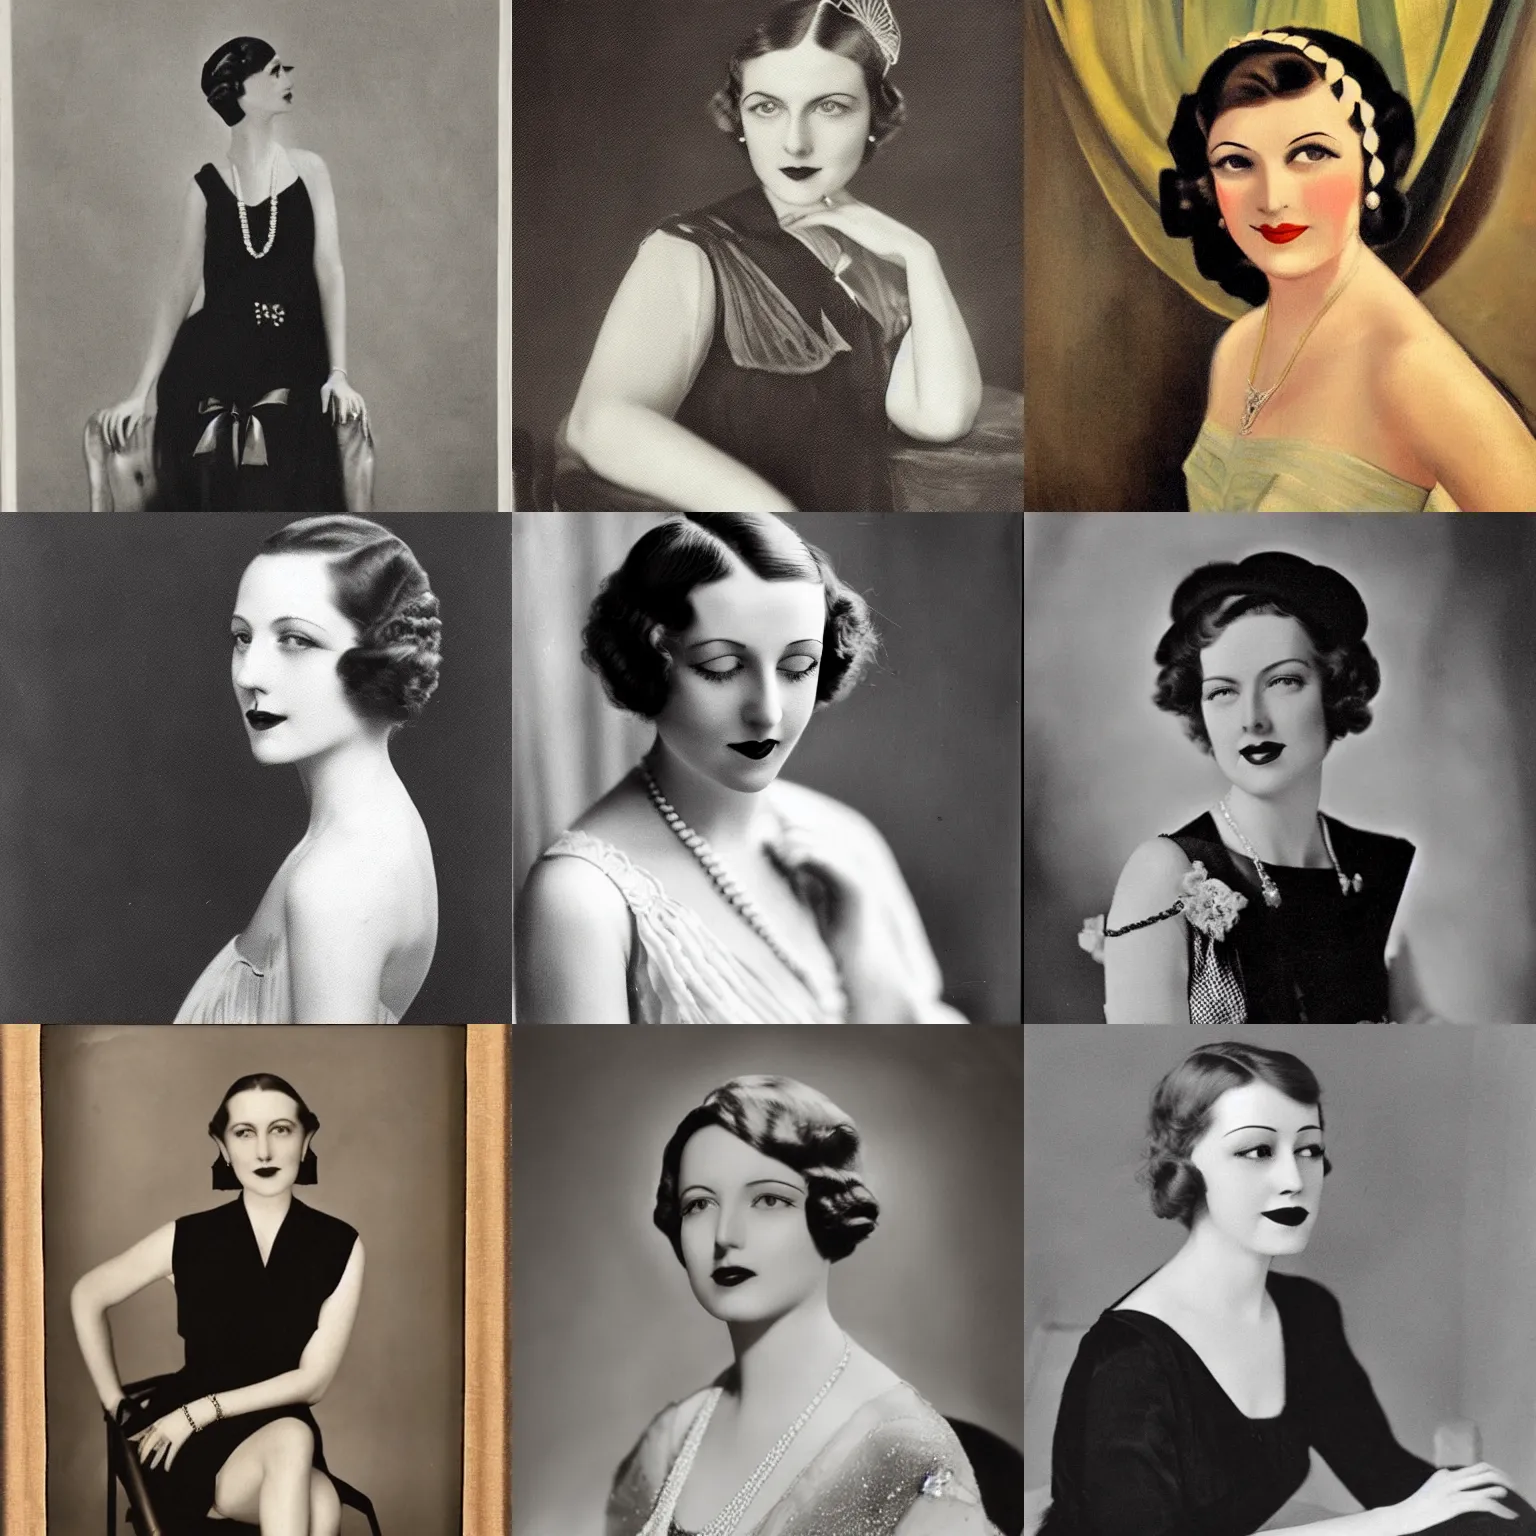 Prompt: a portrait of an elegant lady, 1930s